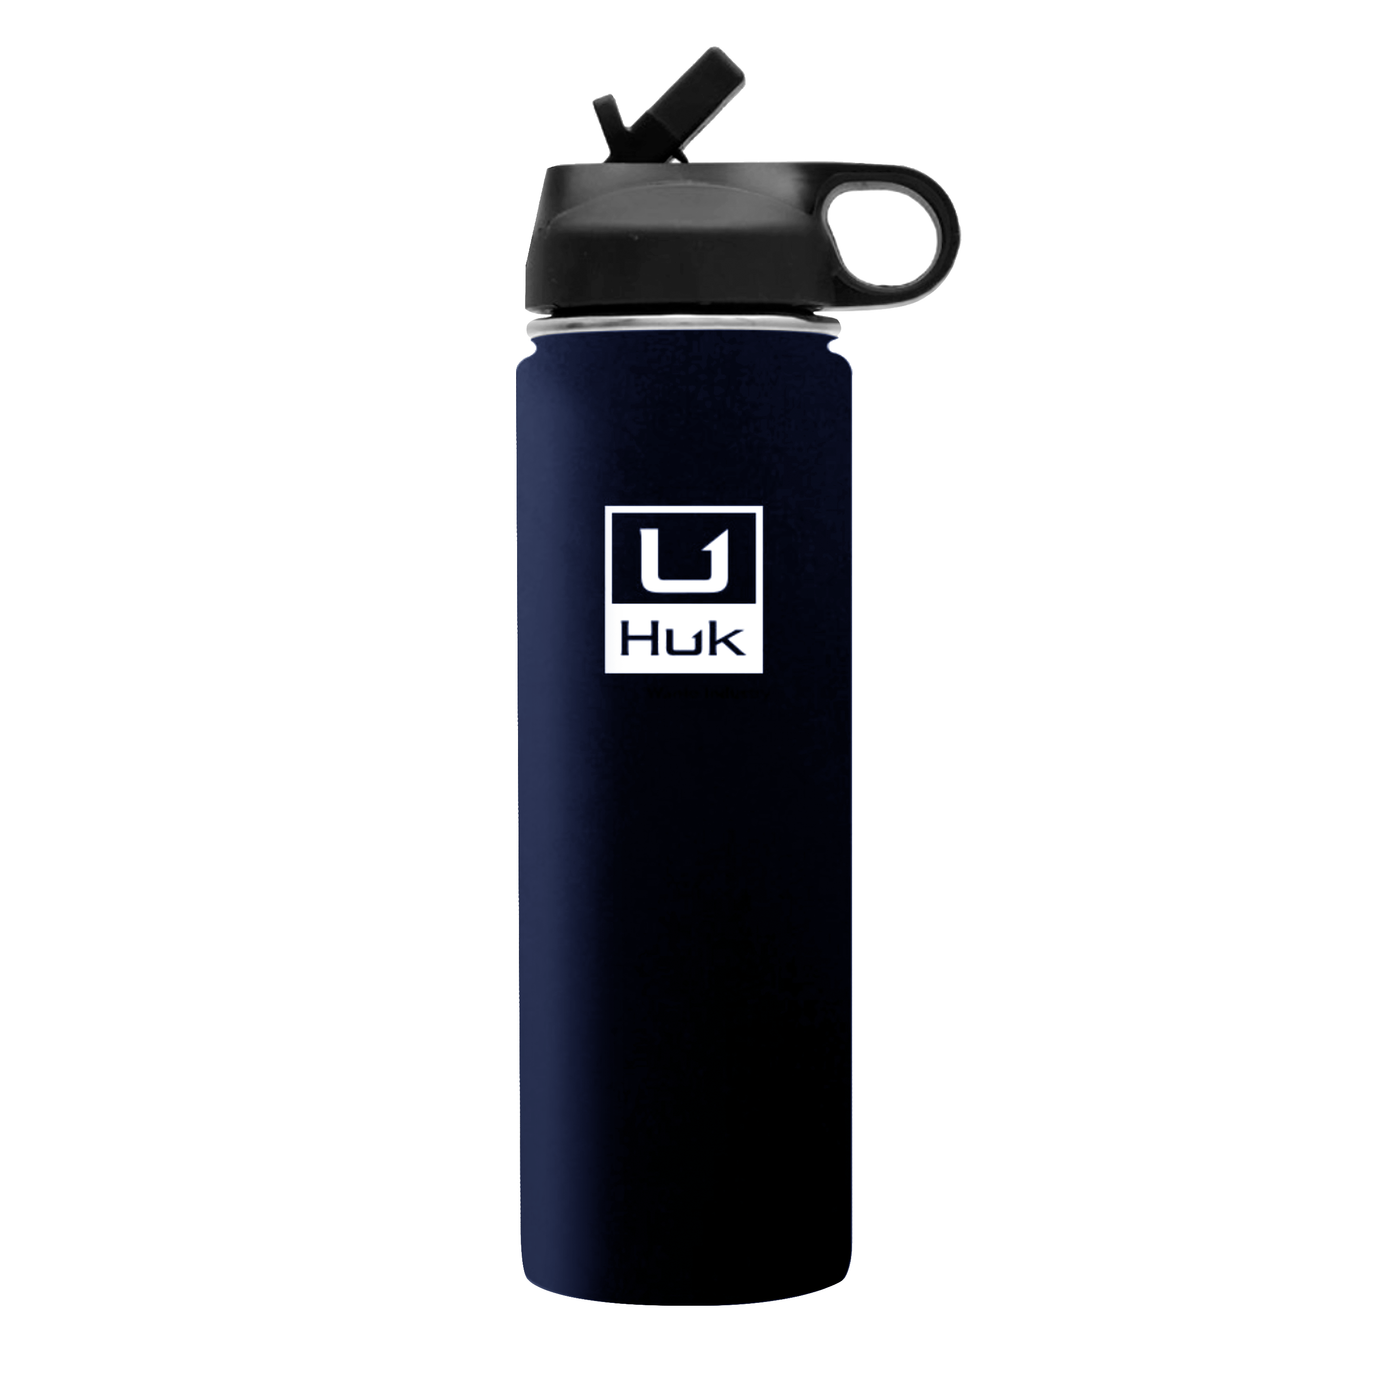 Huk Water Bottle